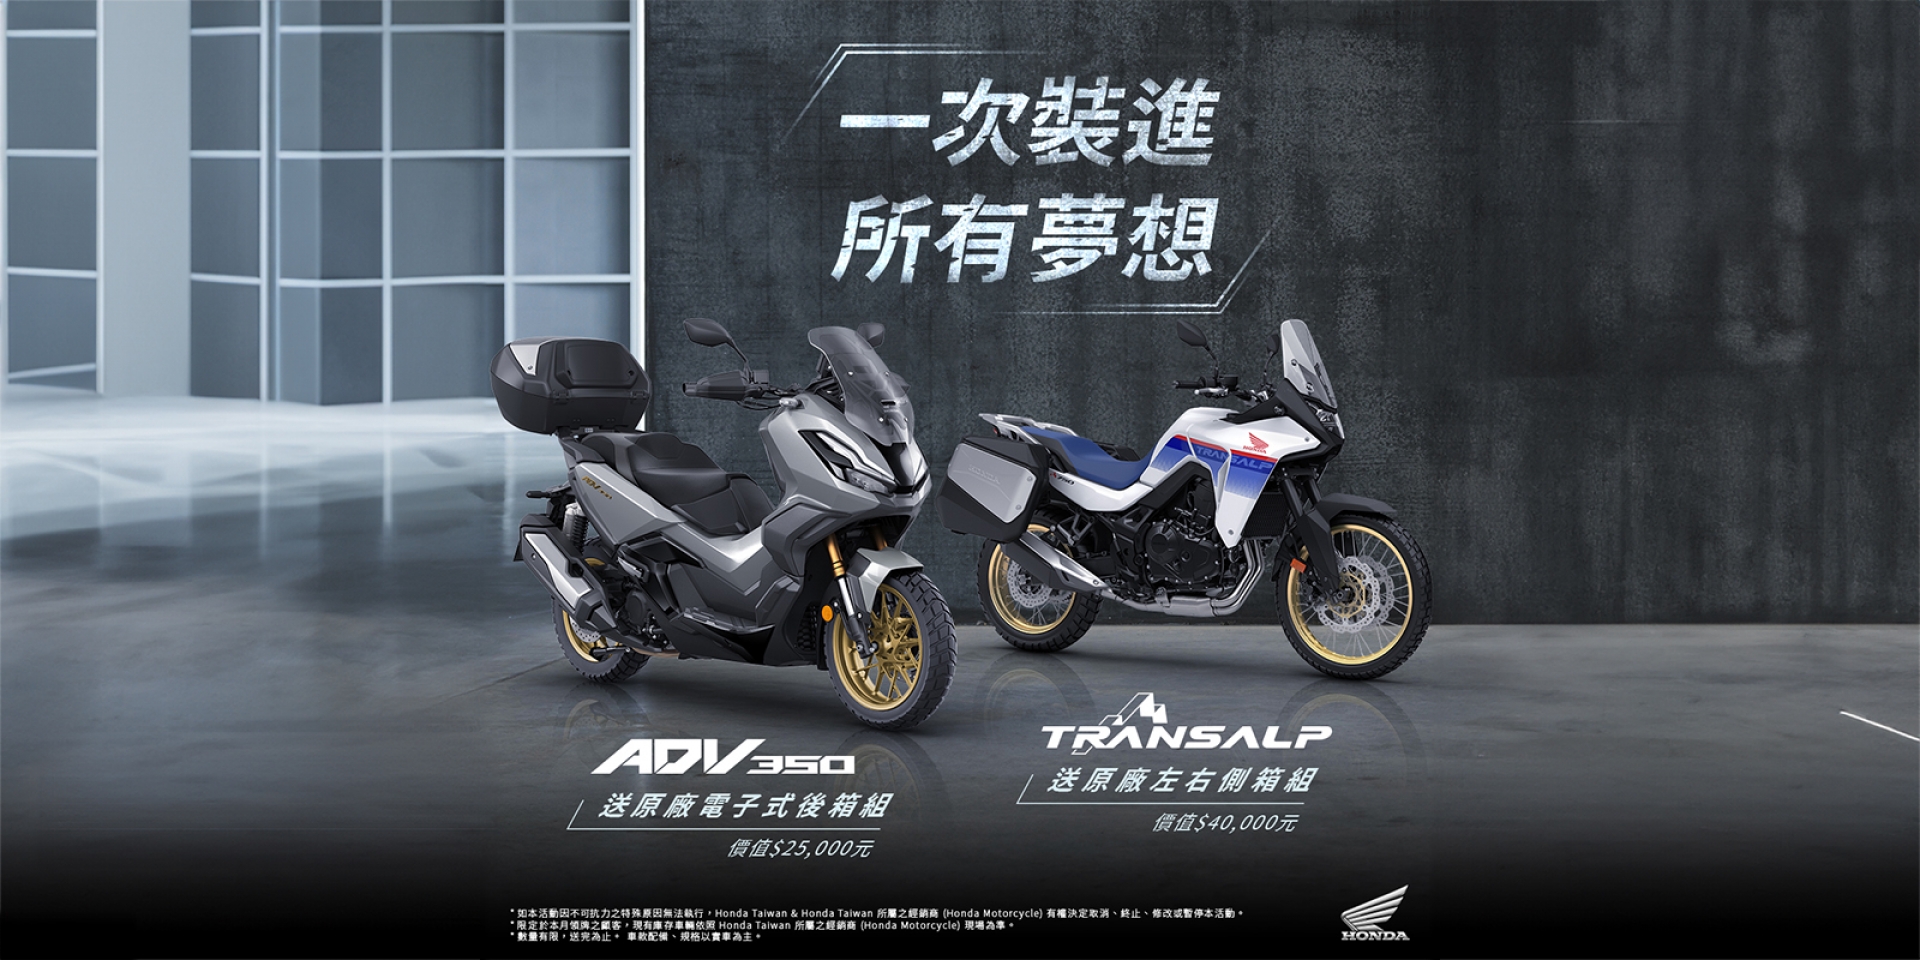 Honda Taiwan 6月限定車款優惠活動開跑 XL750 Transalp、ADV350 即贈原廠精選配件。 CBR500R 零利率低月付